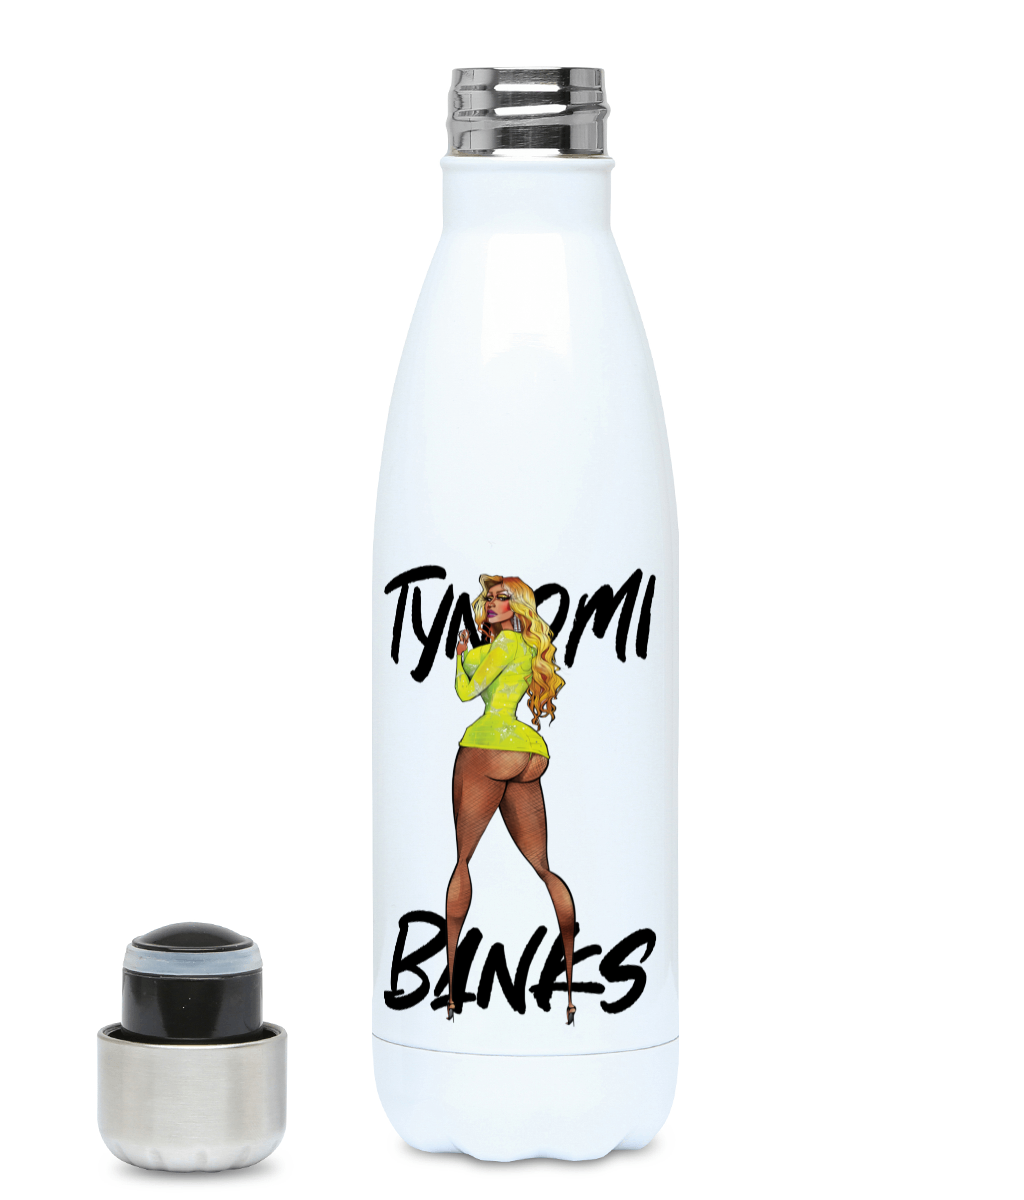 Tynomi Banks - Water Bottle - SNATCHED MERCH